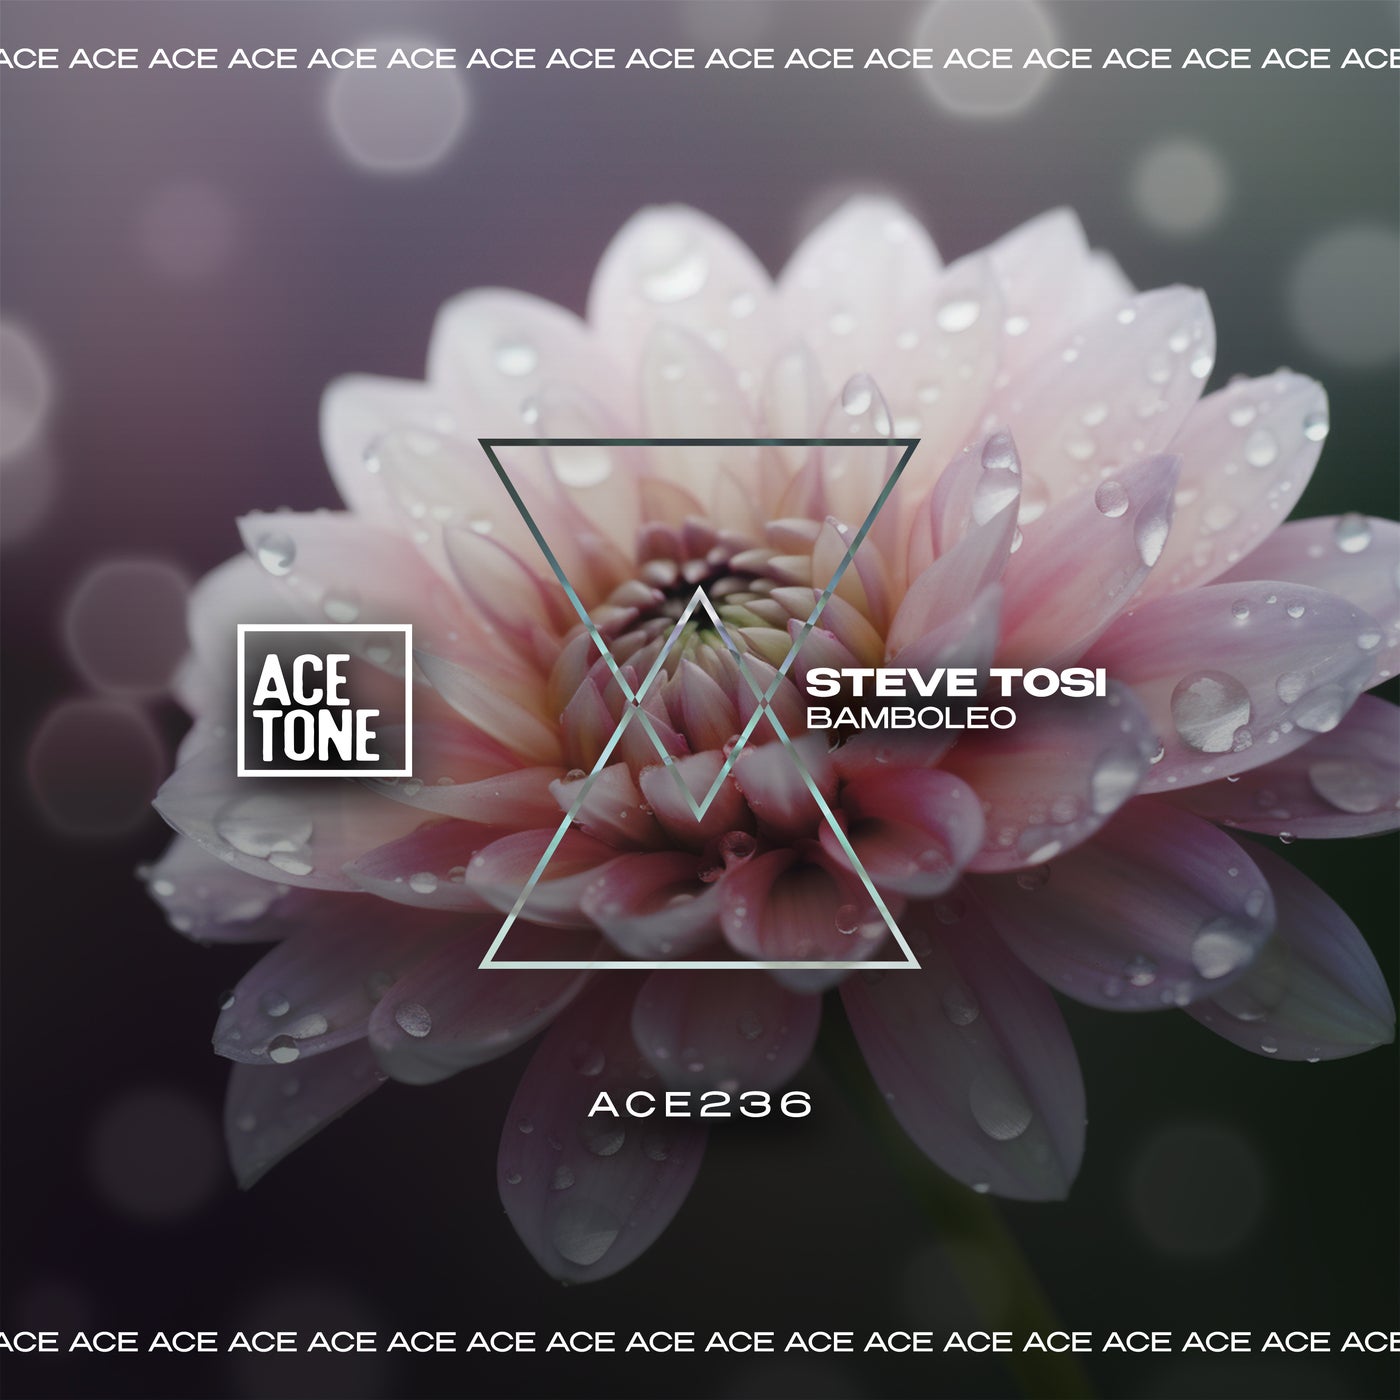 image cover: Steve Tosi - Bamboleo on Acetone